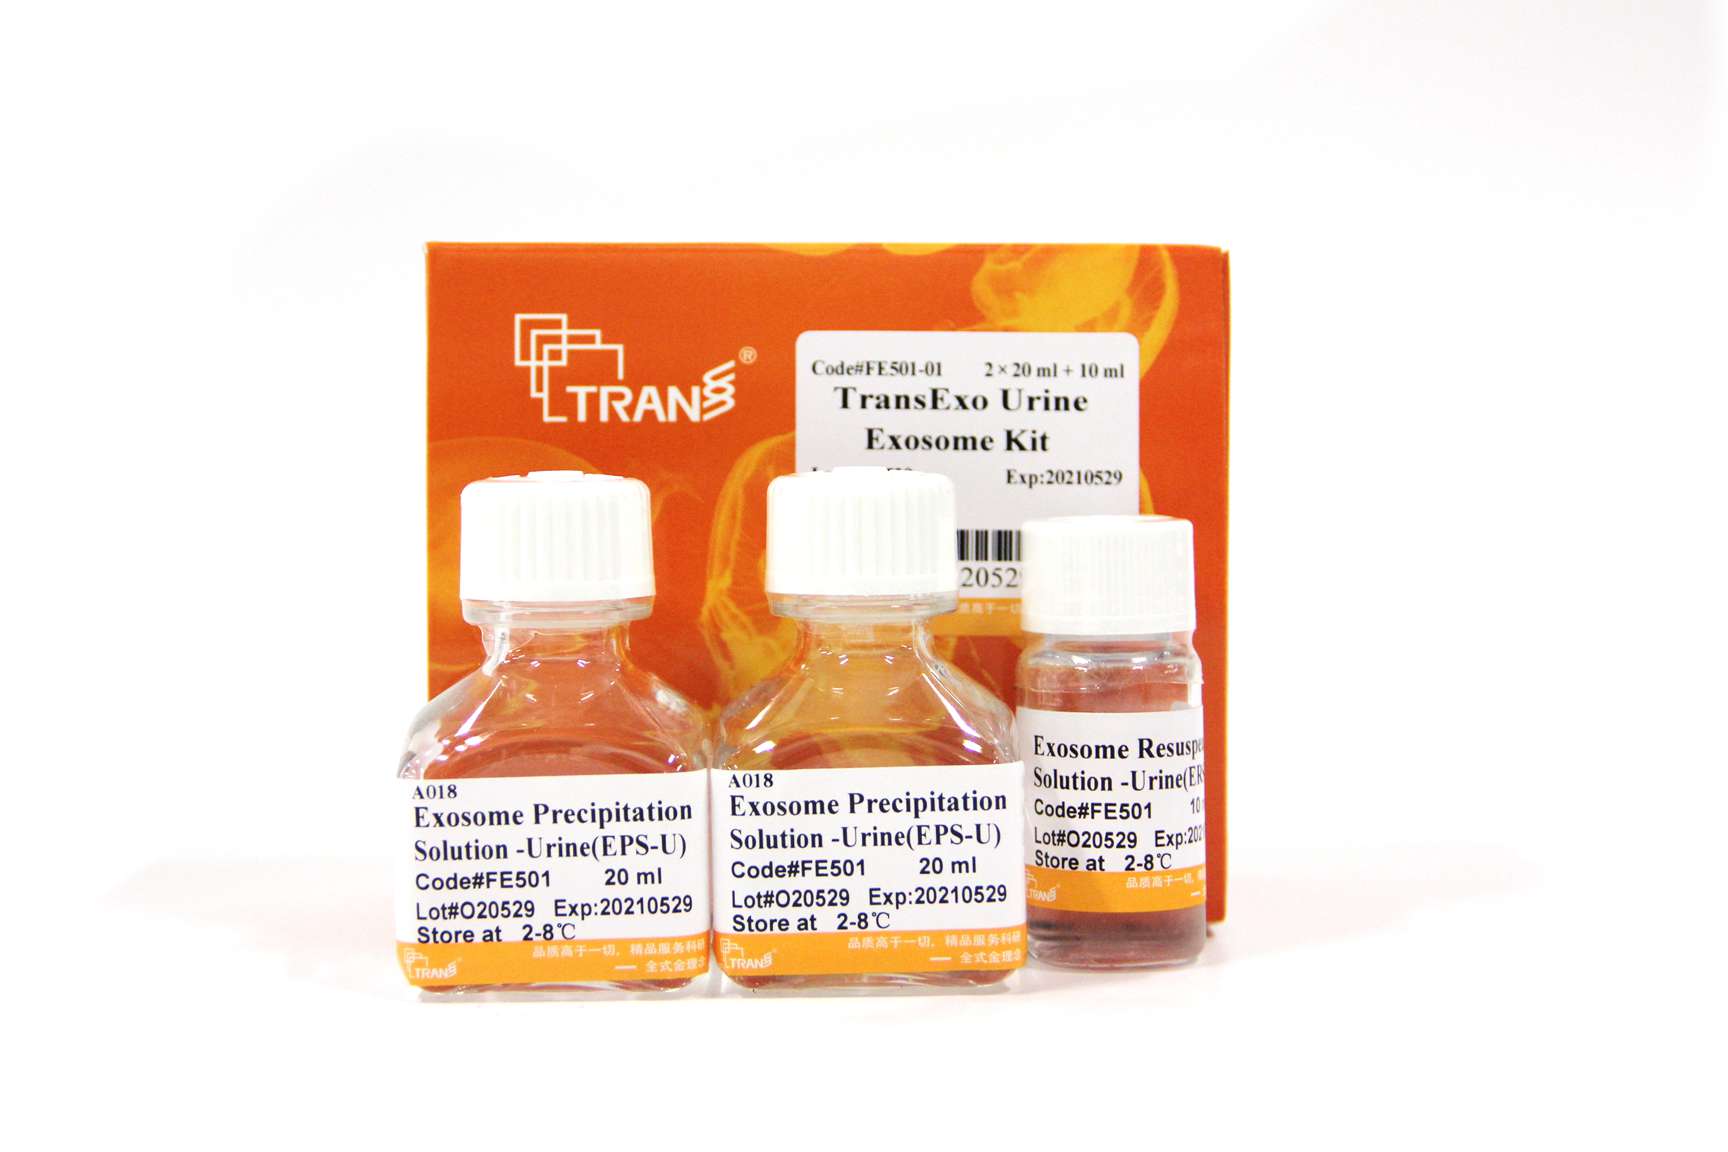 Urine Exosome Kit.jpg